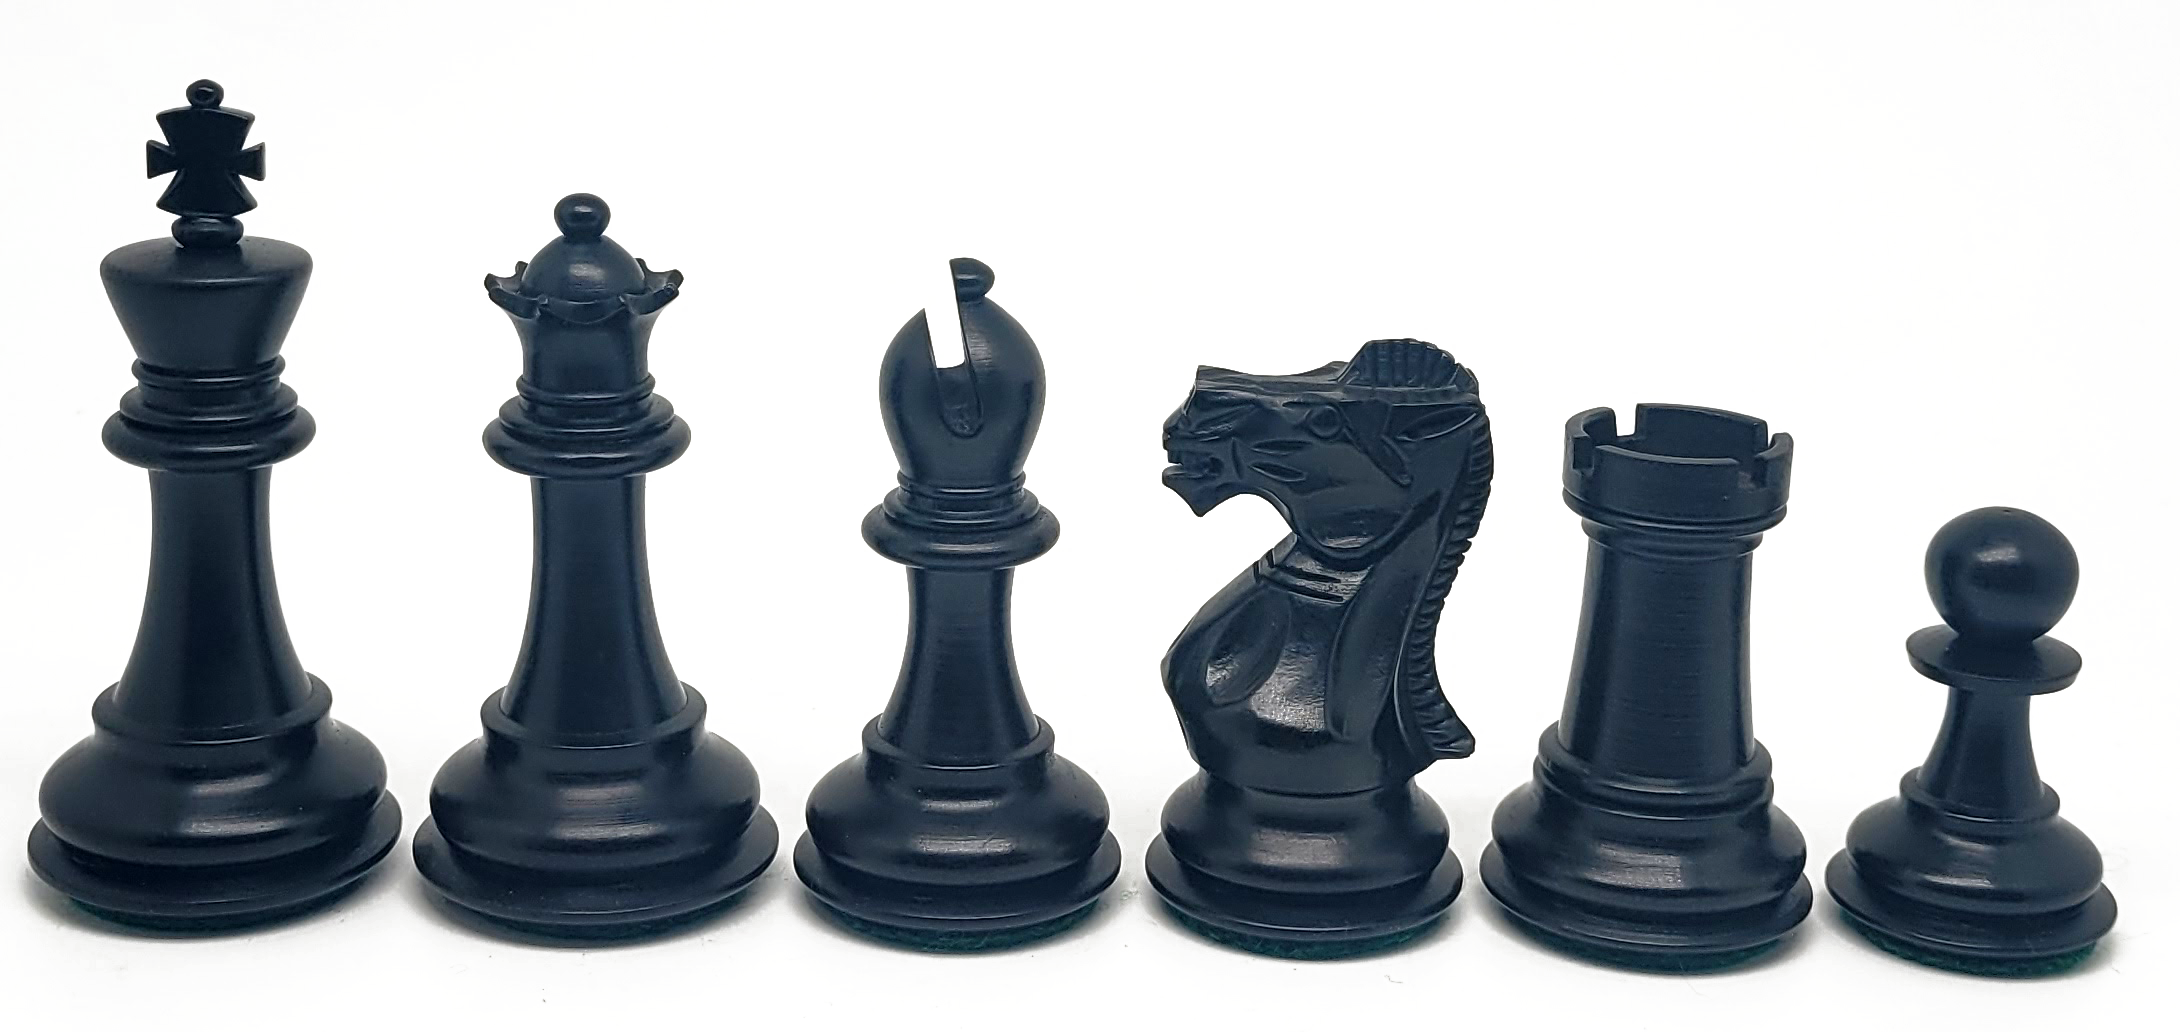 VI/ Piezas de ajedrez Ultimate "3" Ebanizado.